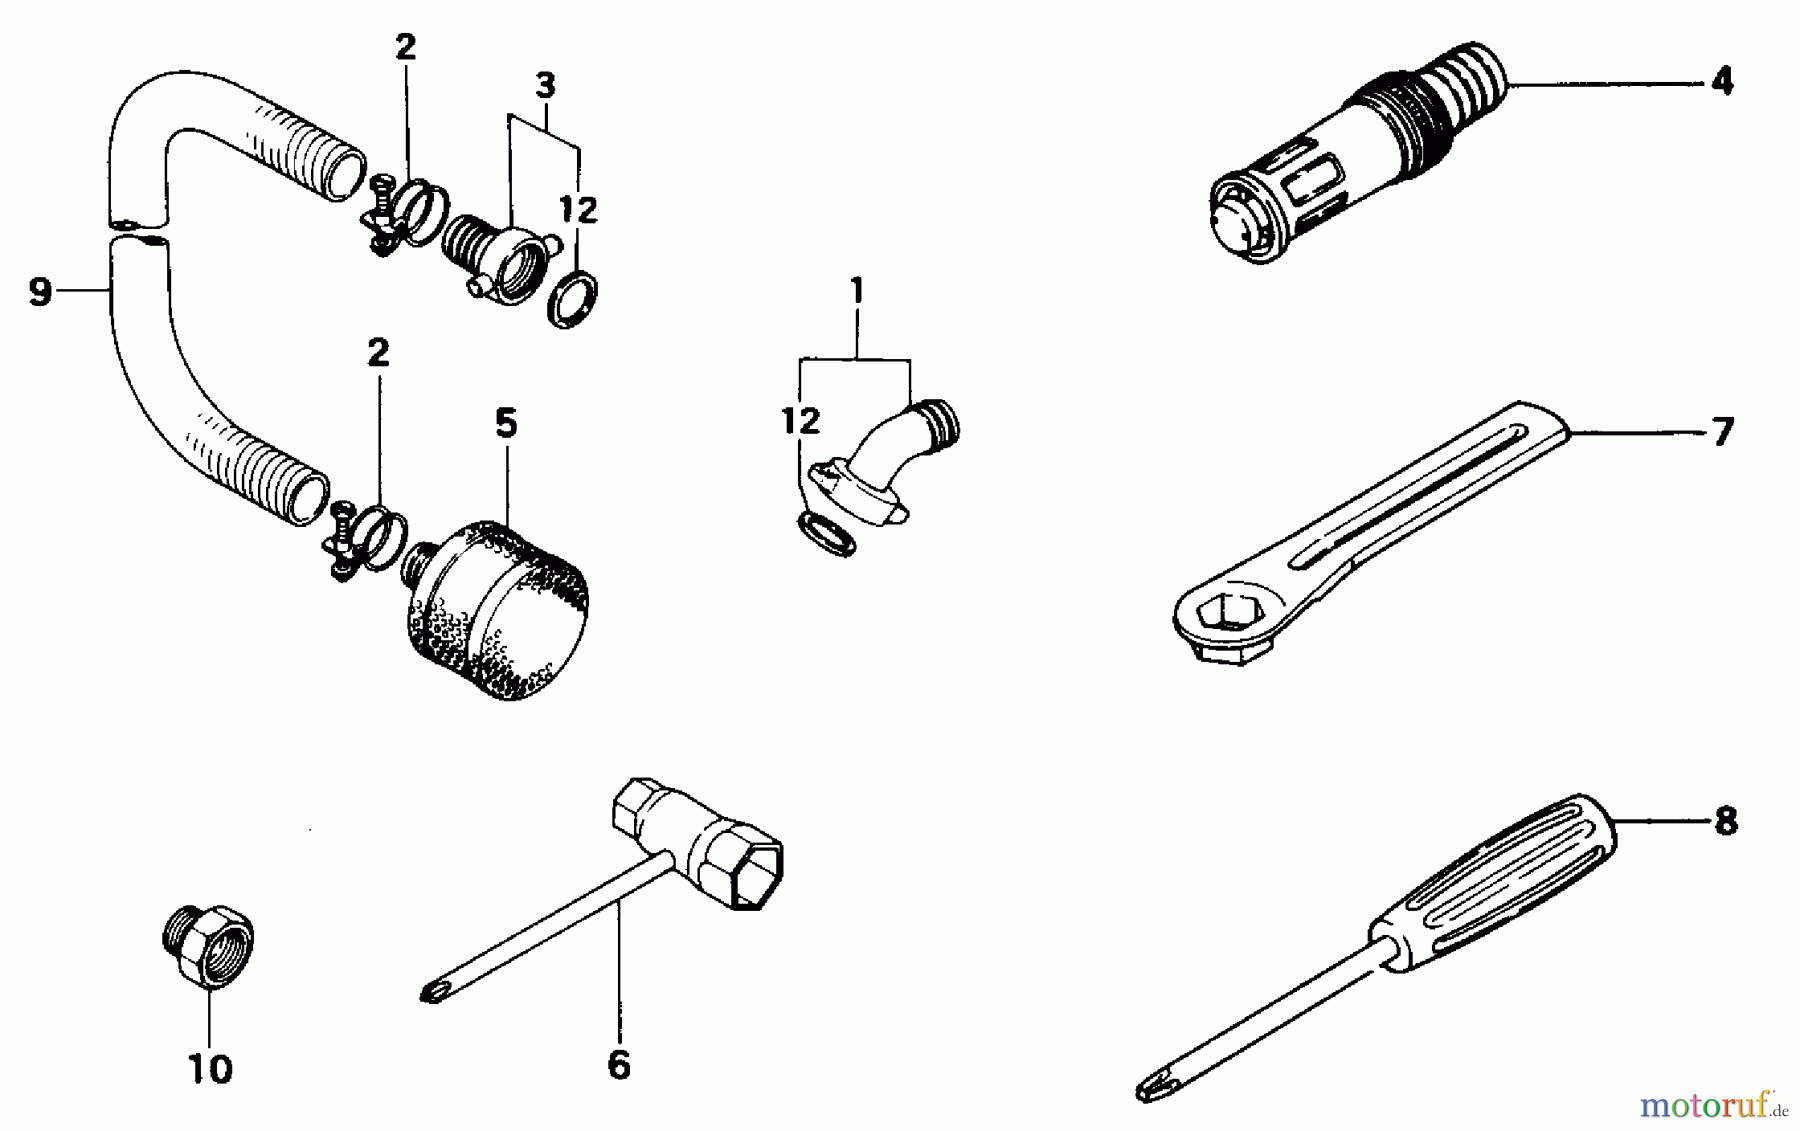  Tanaka Wasser Pumpen QCP-121 - Tanaka Centrifugal Pump Tools & Optional Parts